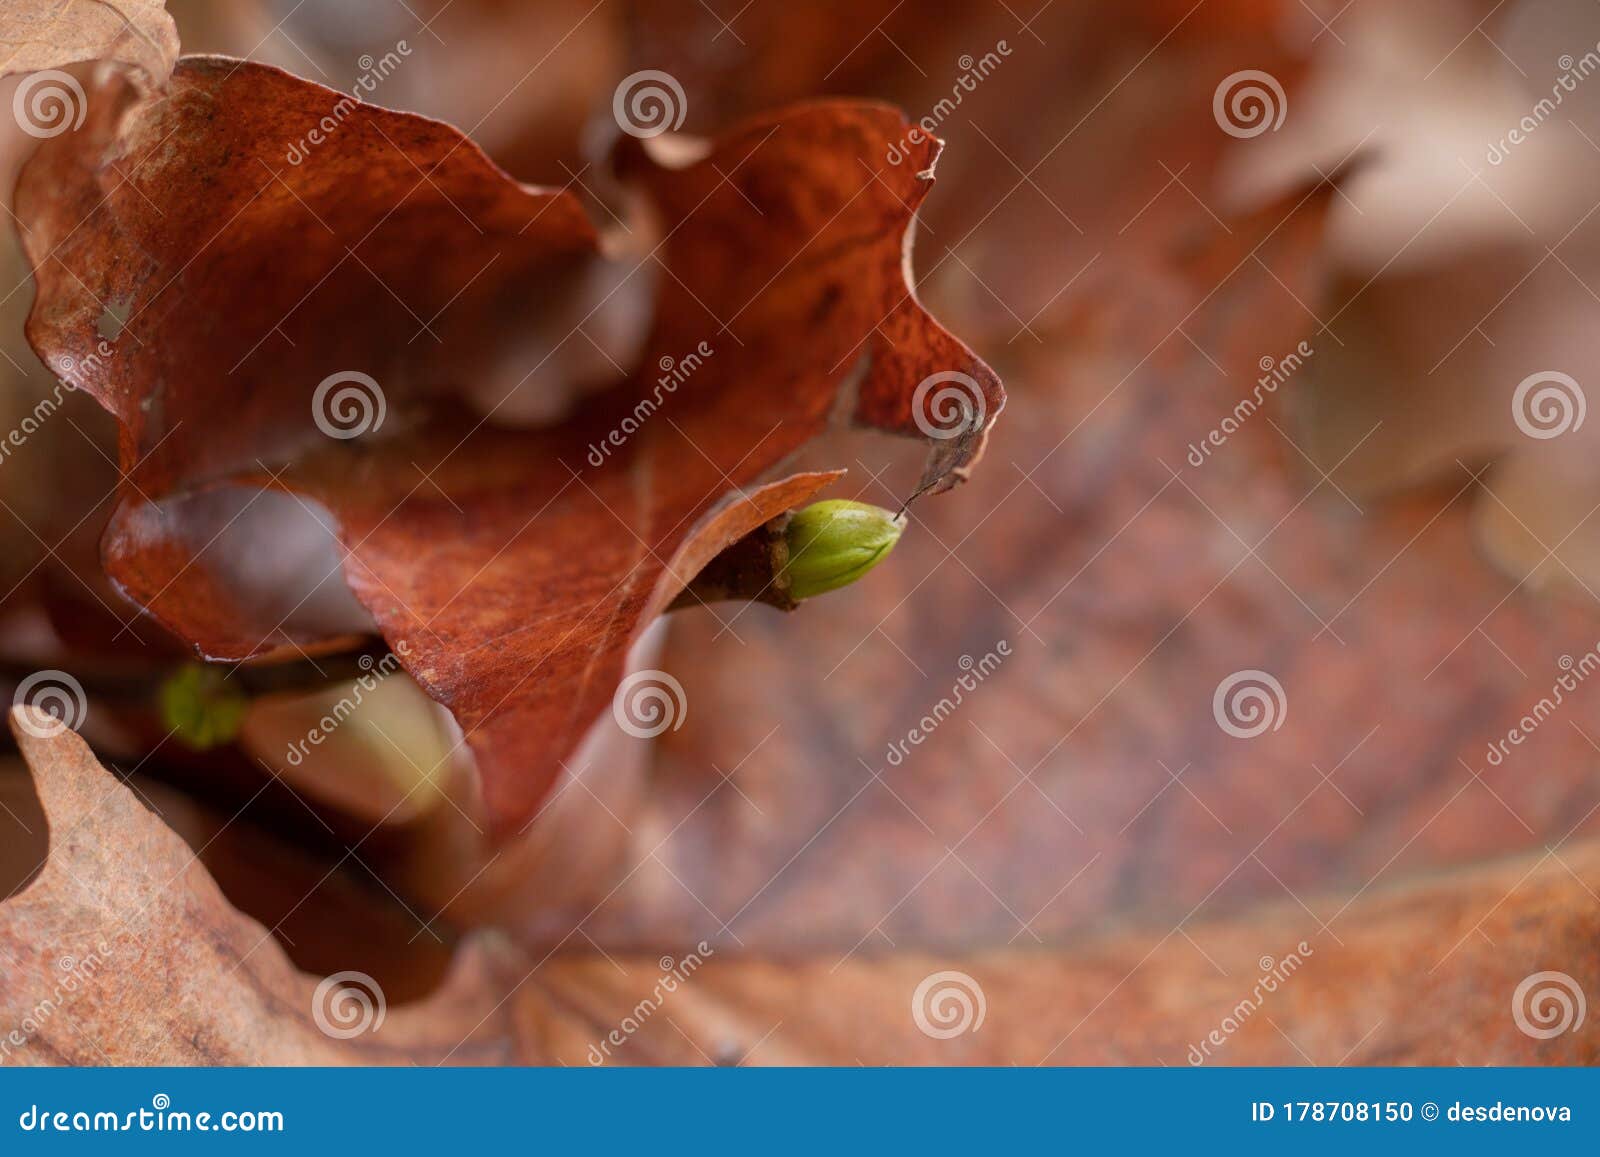 close-up of a dried vine leaf